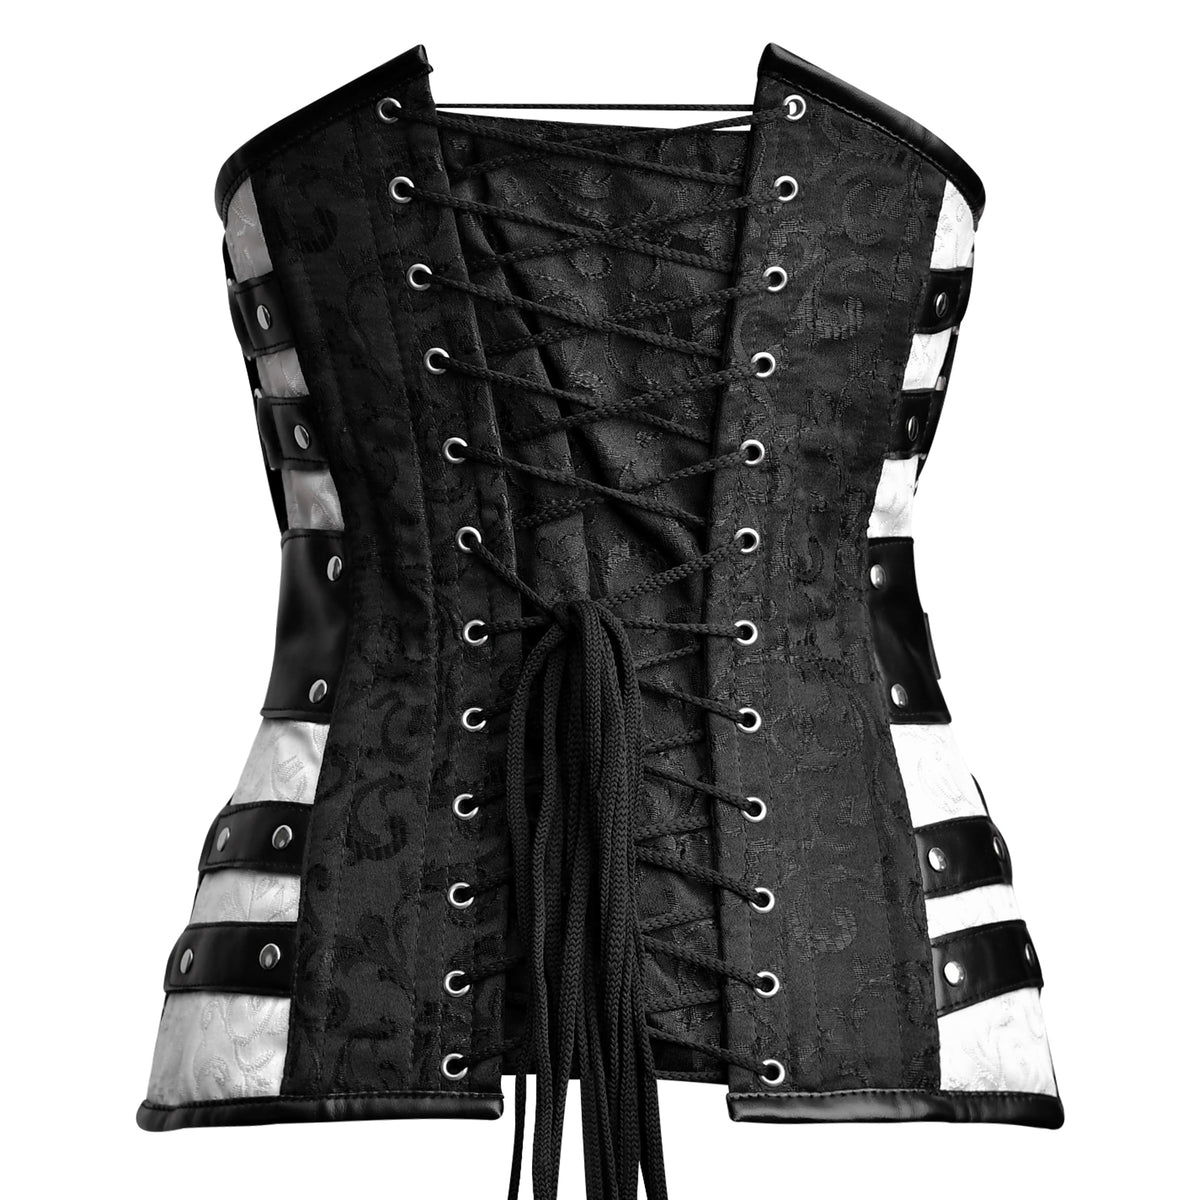 Black and white corset Top